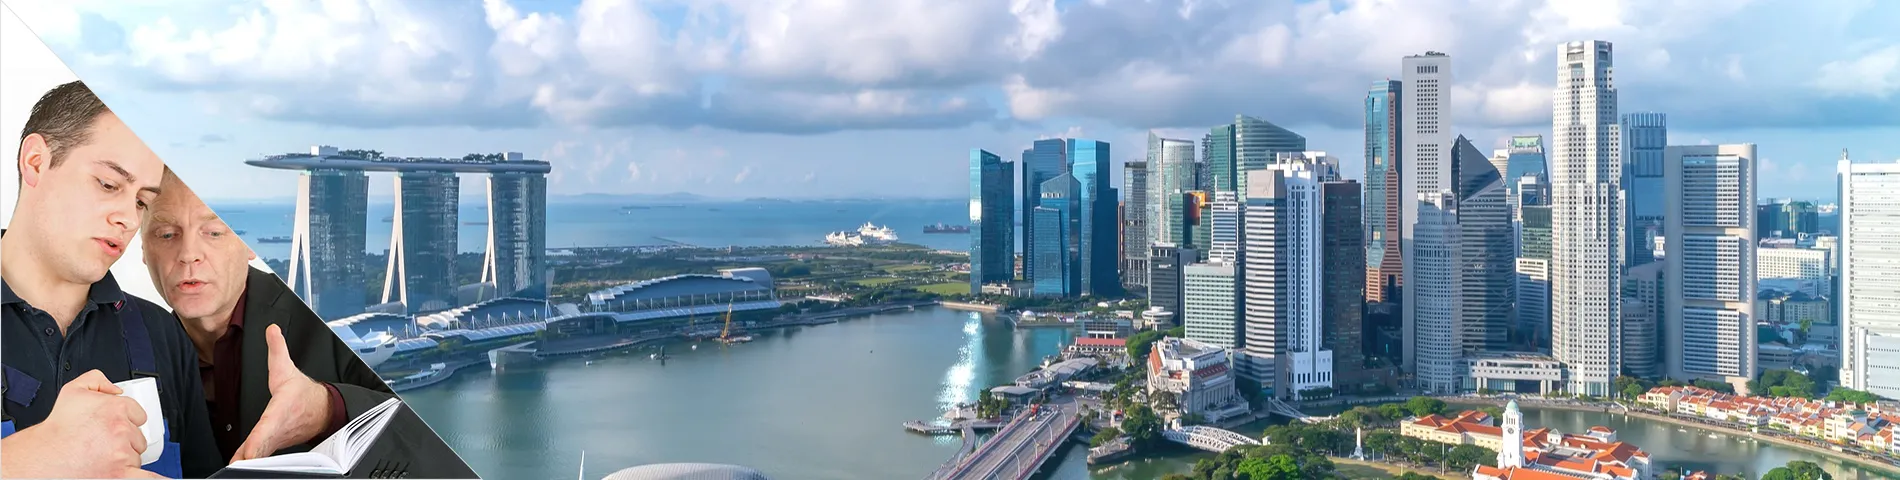 Singapore - 